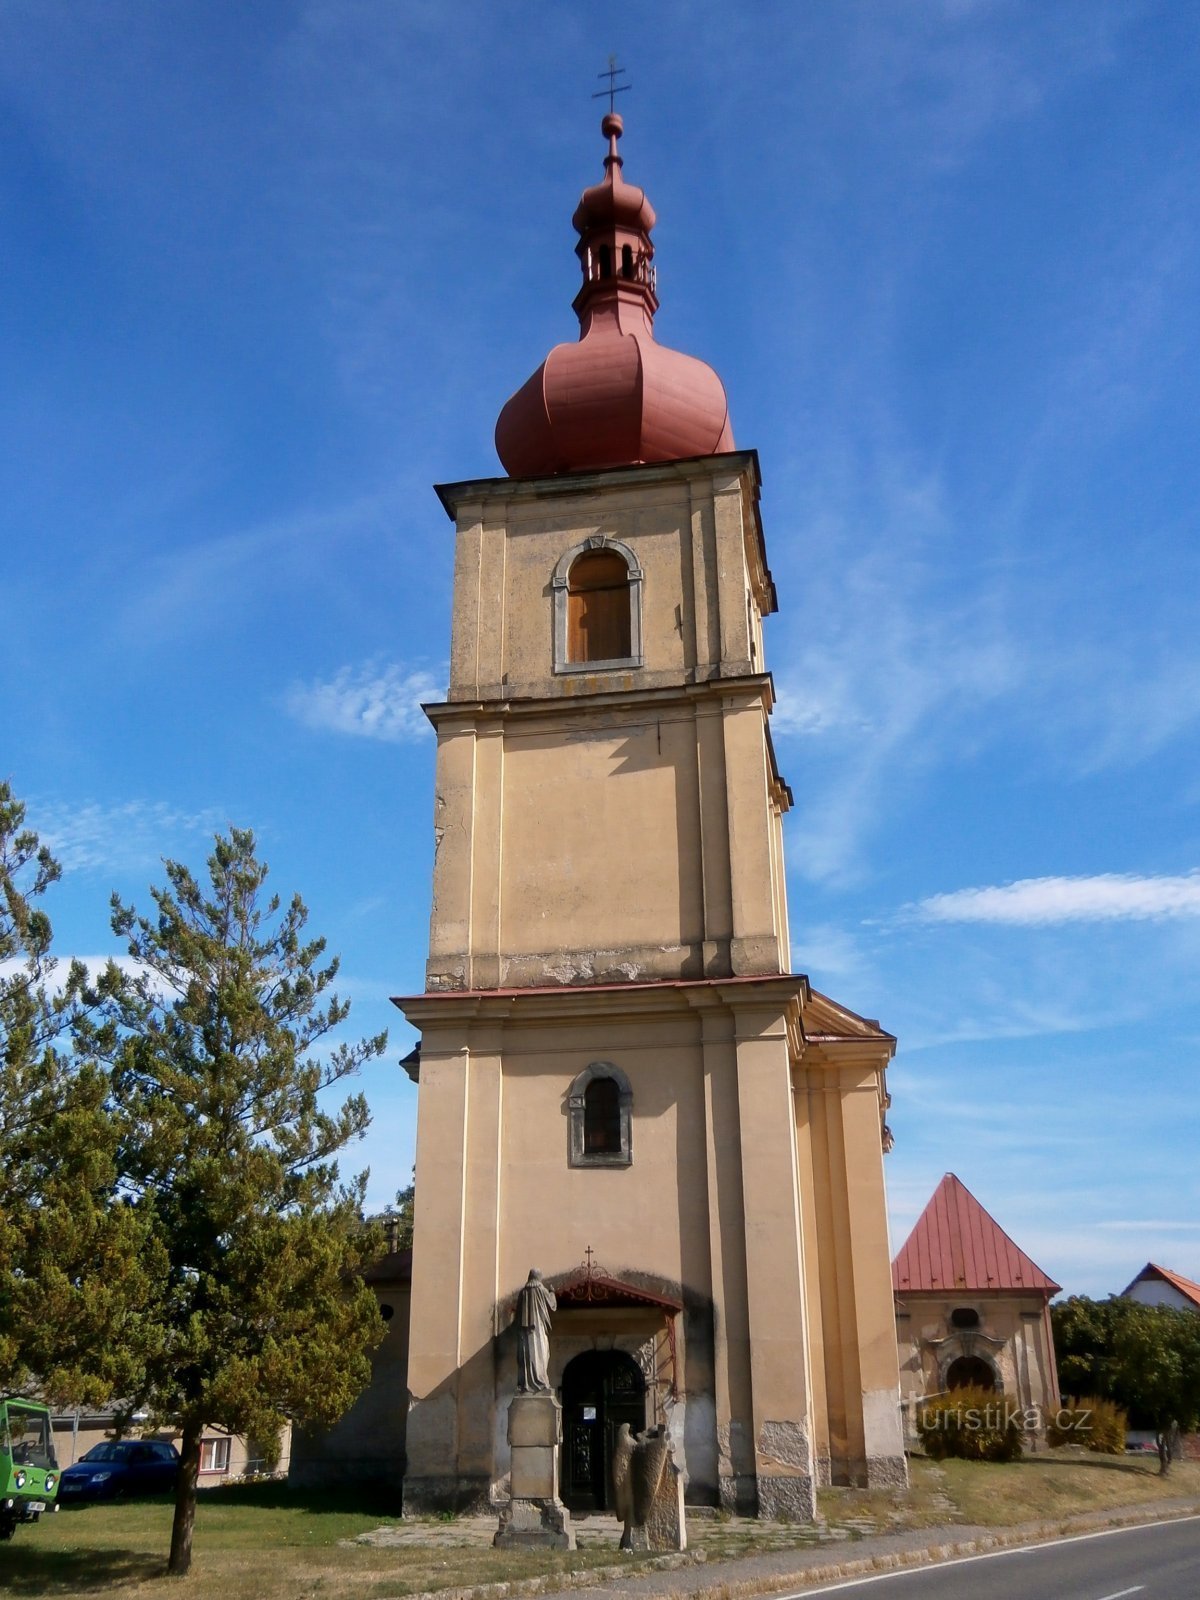 Церковь св. Хильи, аббат (Хвалковице)